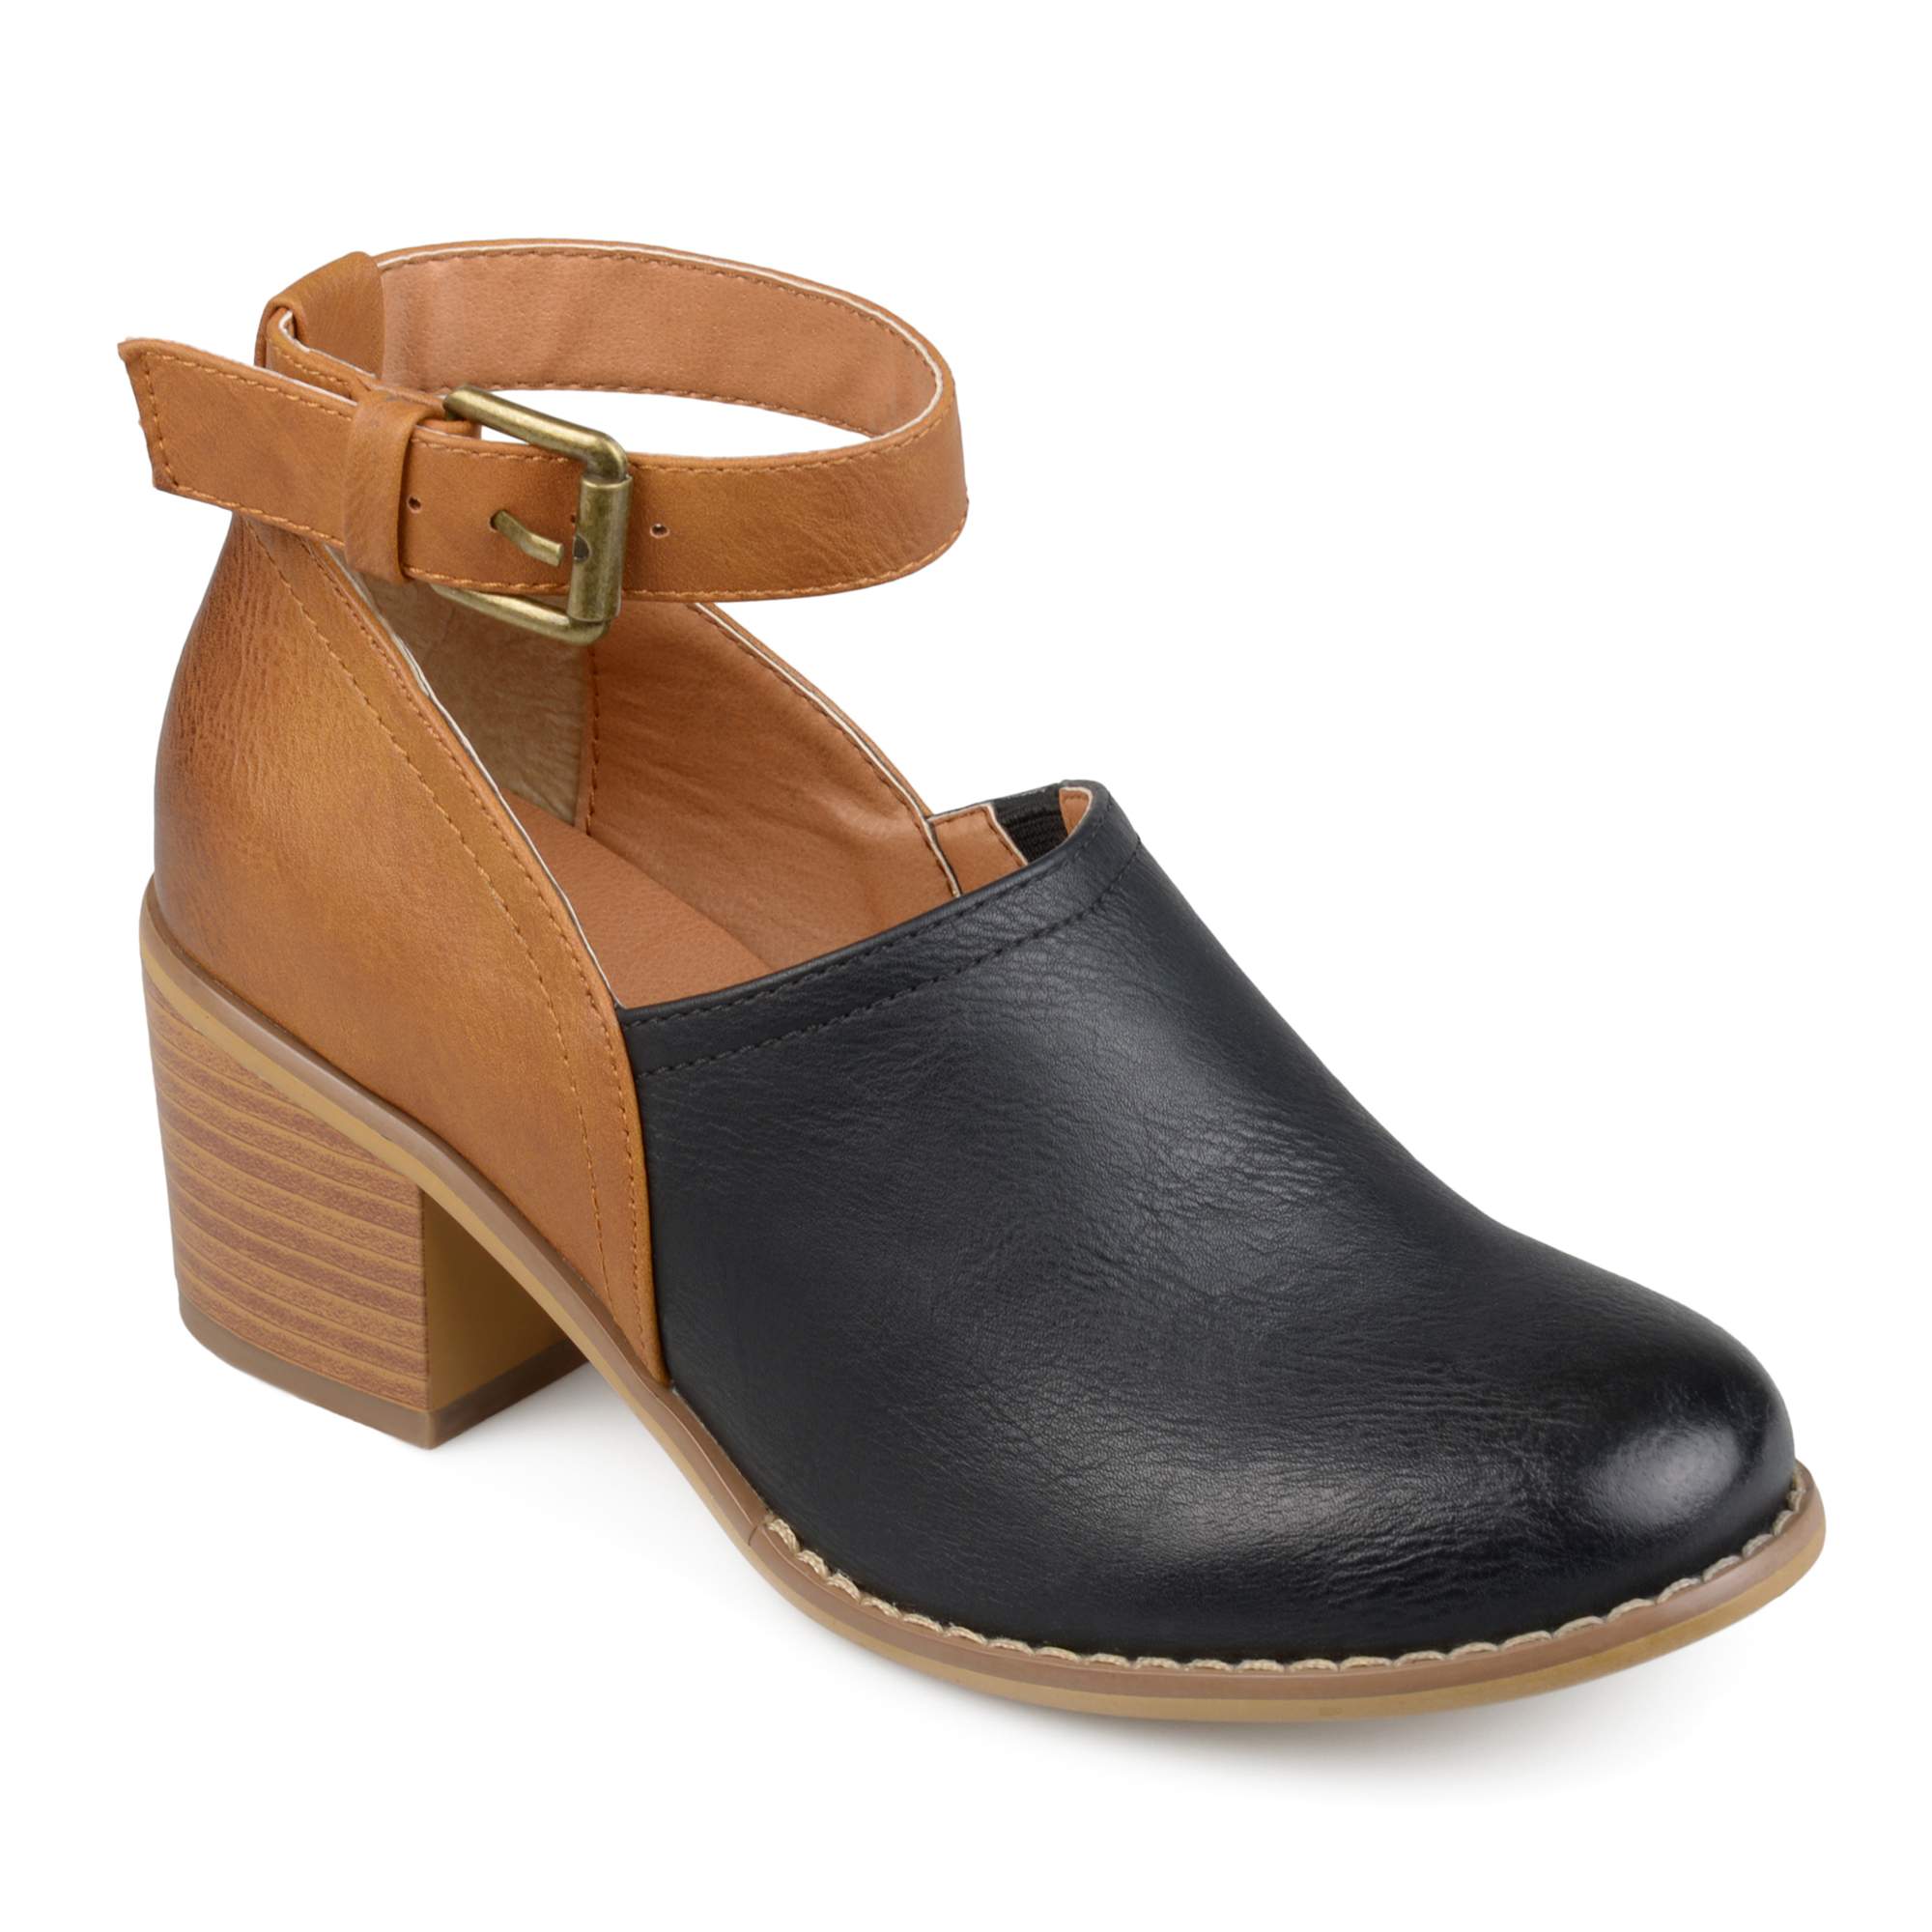 Buy High Heel Clogs, Heel Sandals, Clogs 9, Swedish Clogs, Women Sandals,  Black Clogs,brown Clogs, Gift for Women,brown Clogs,clogs 7, Handmade  Online in India - Etsy